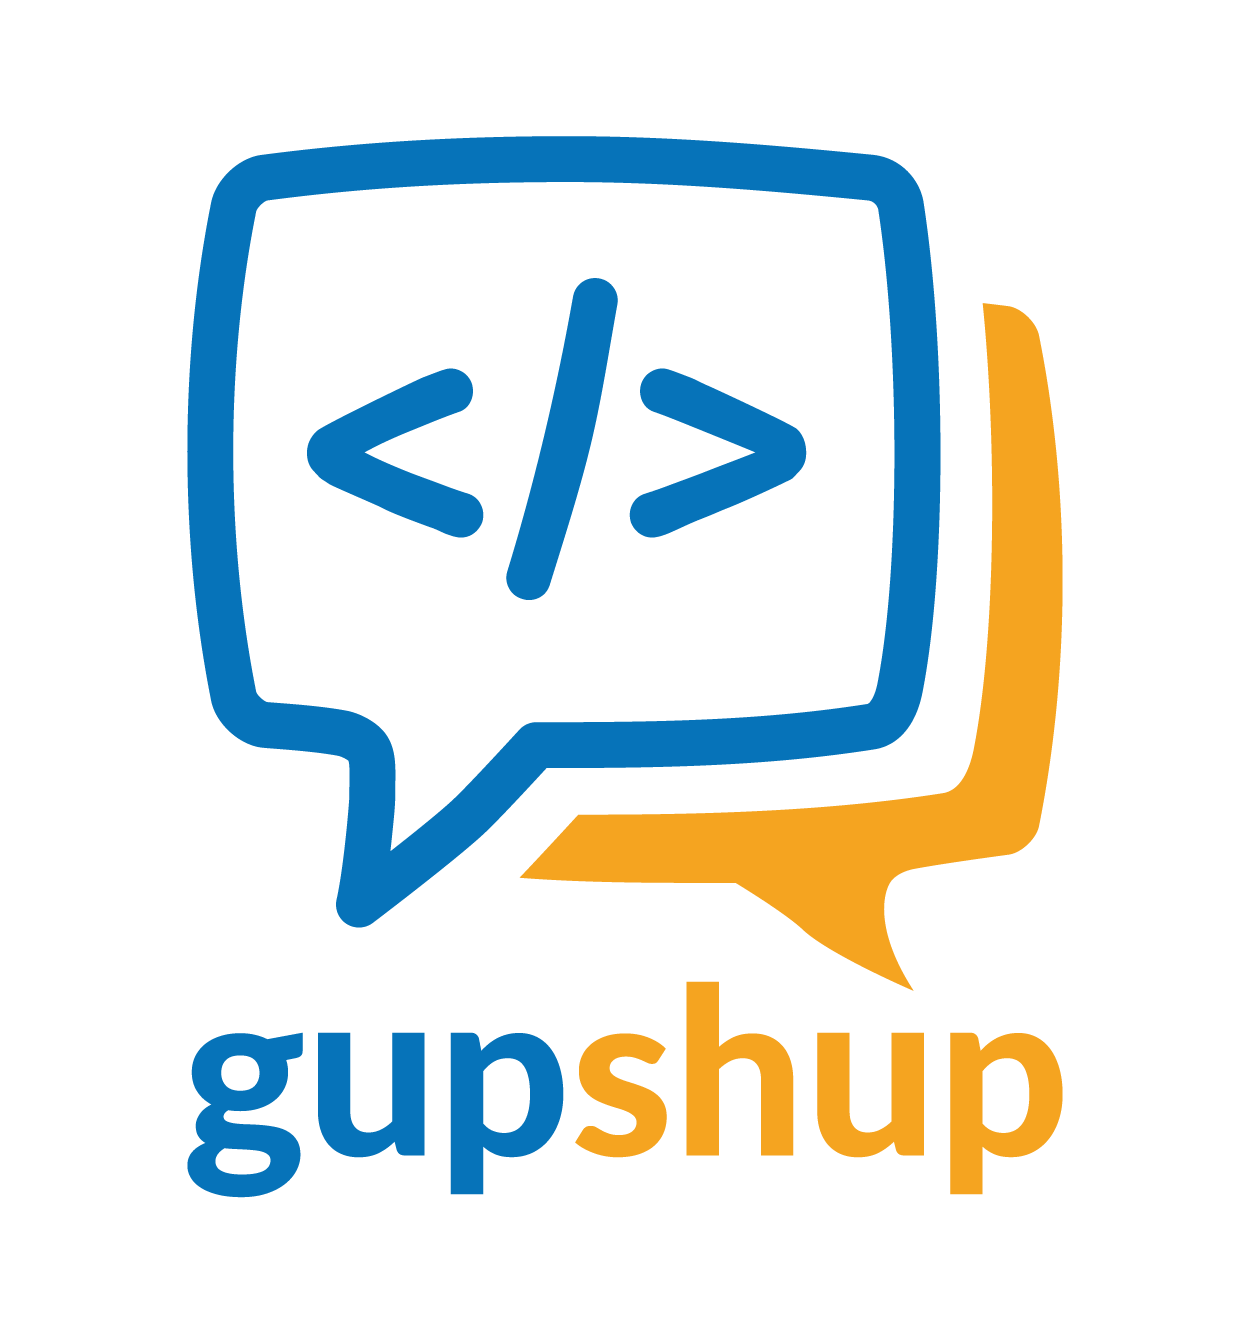 Mews and Gupshup integration